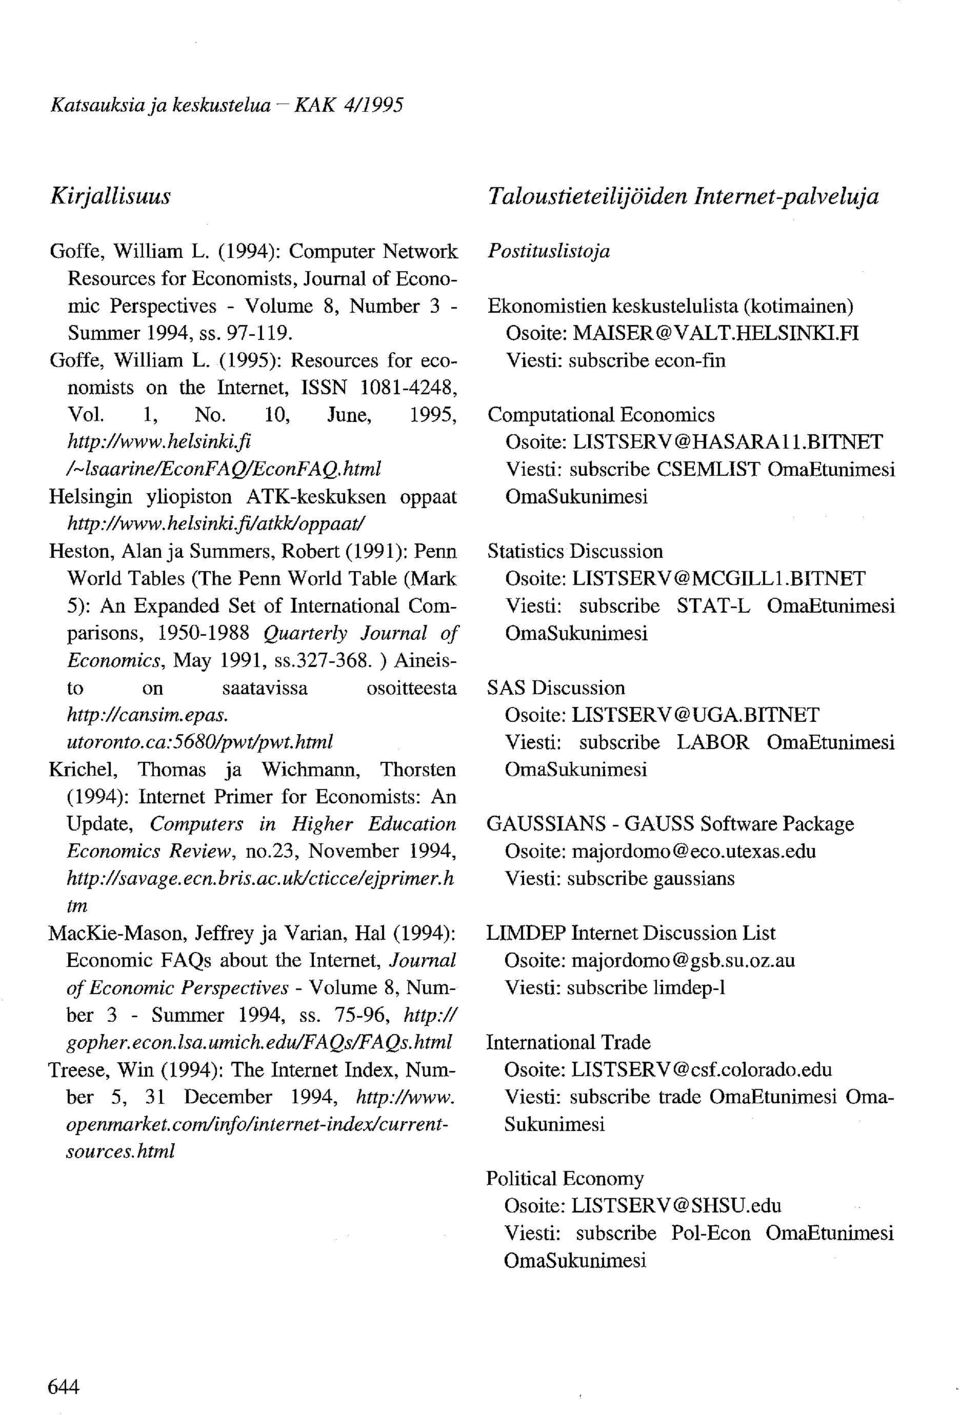 (1995): Resources for economists on the Internet, ISSN 1081-4248, VoI. 1, No. 10, June, 1995, http://www. helsinki.ji /-lsaarine!econfaq/econfaq.